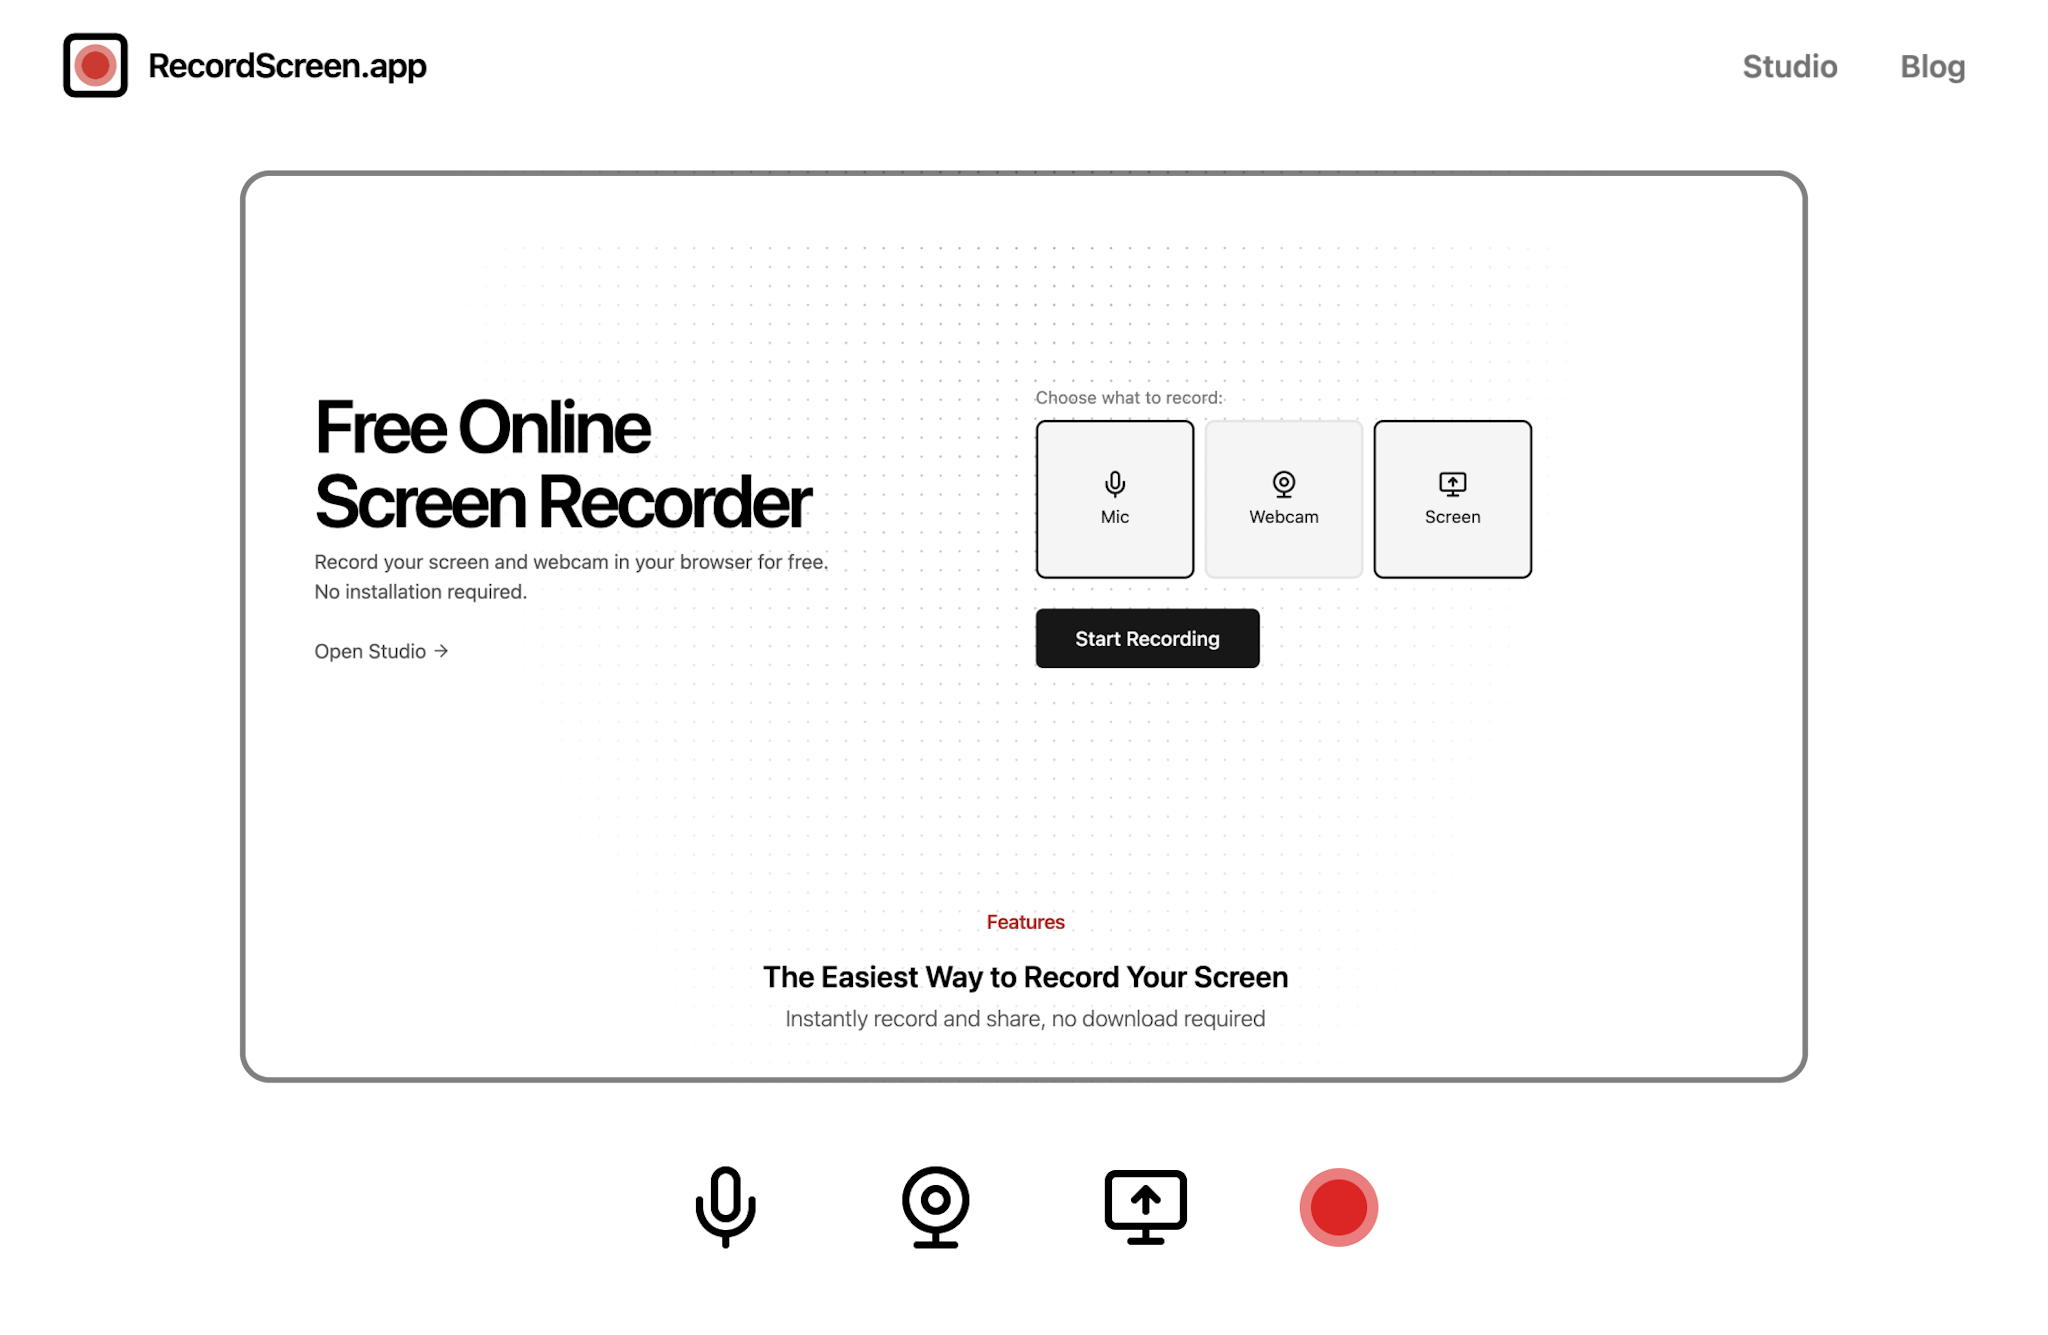 Demo of RecordScreen.app